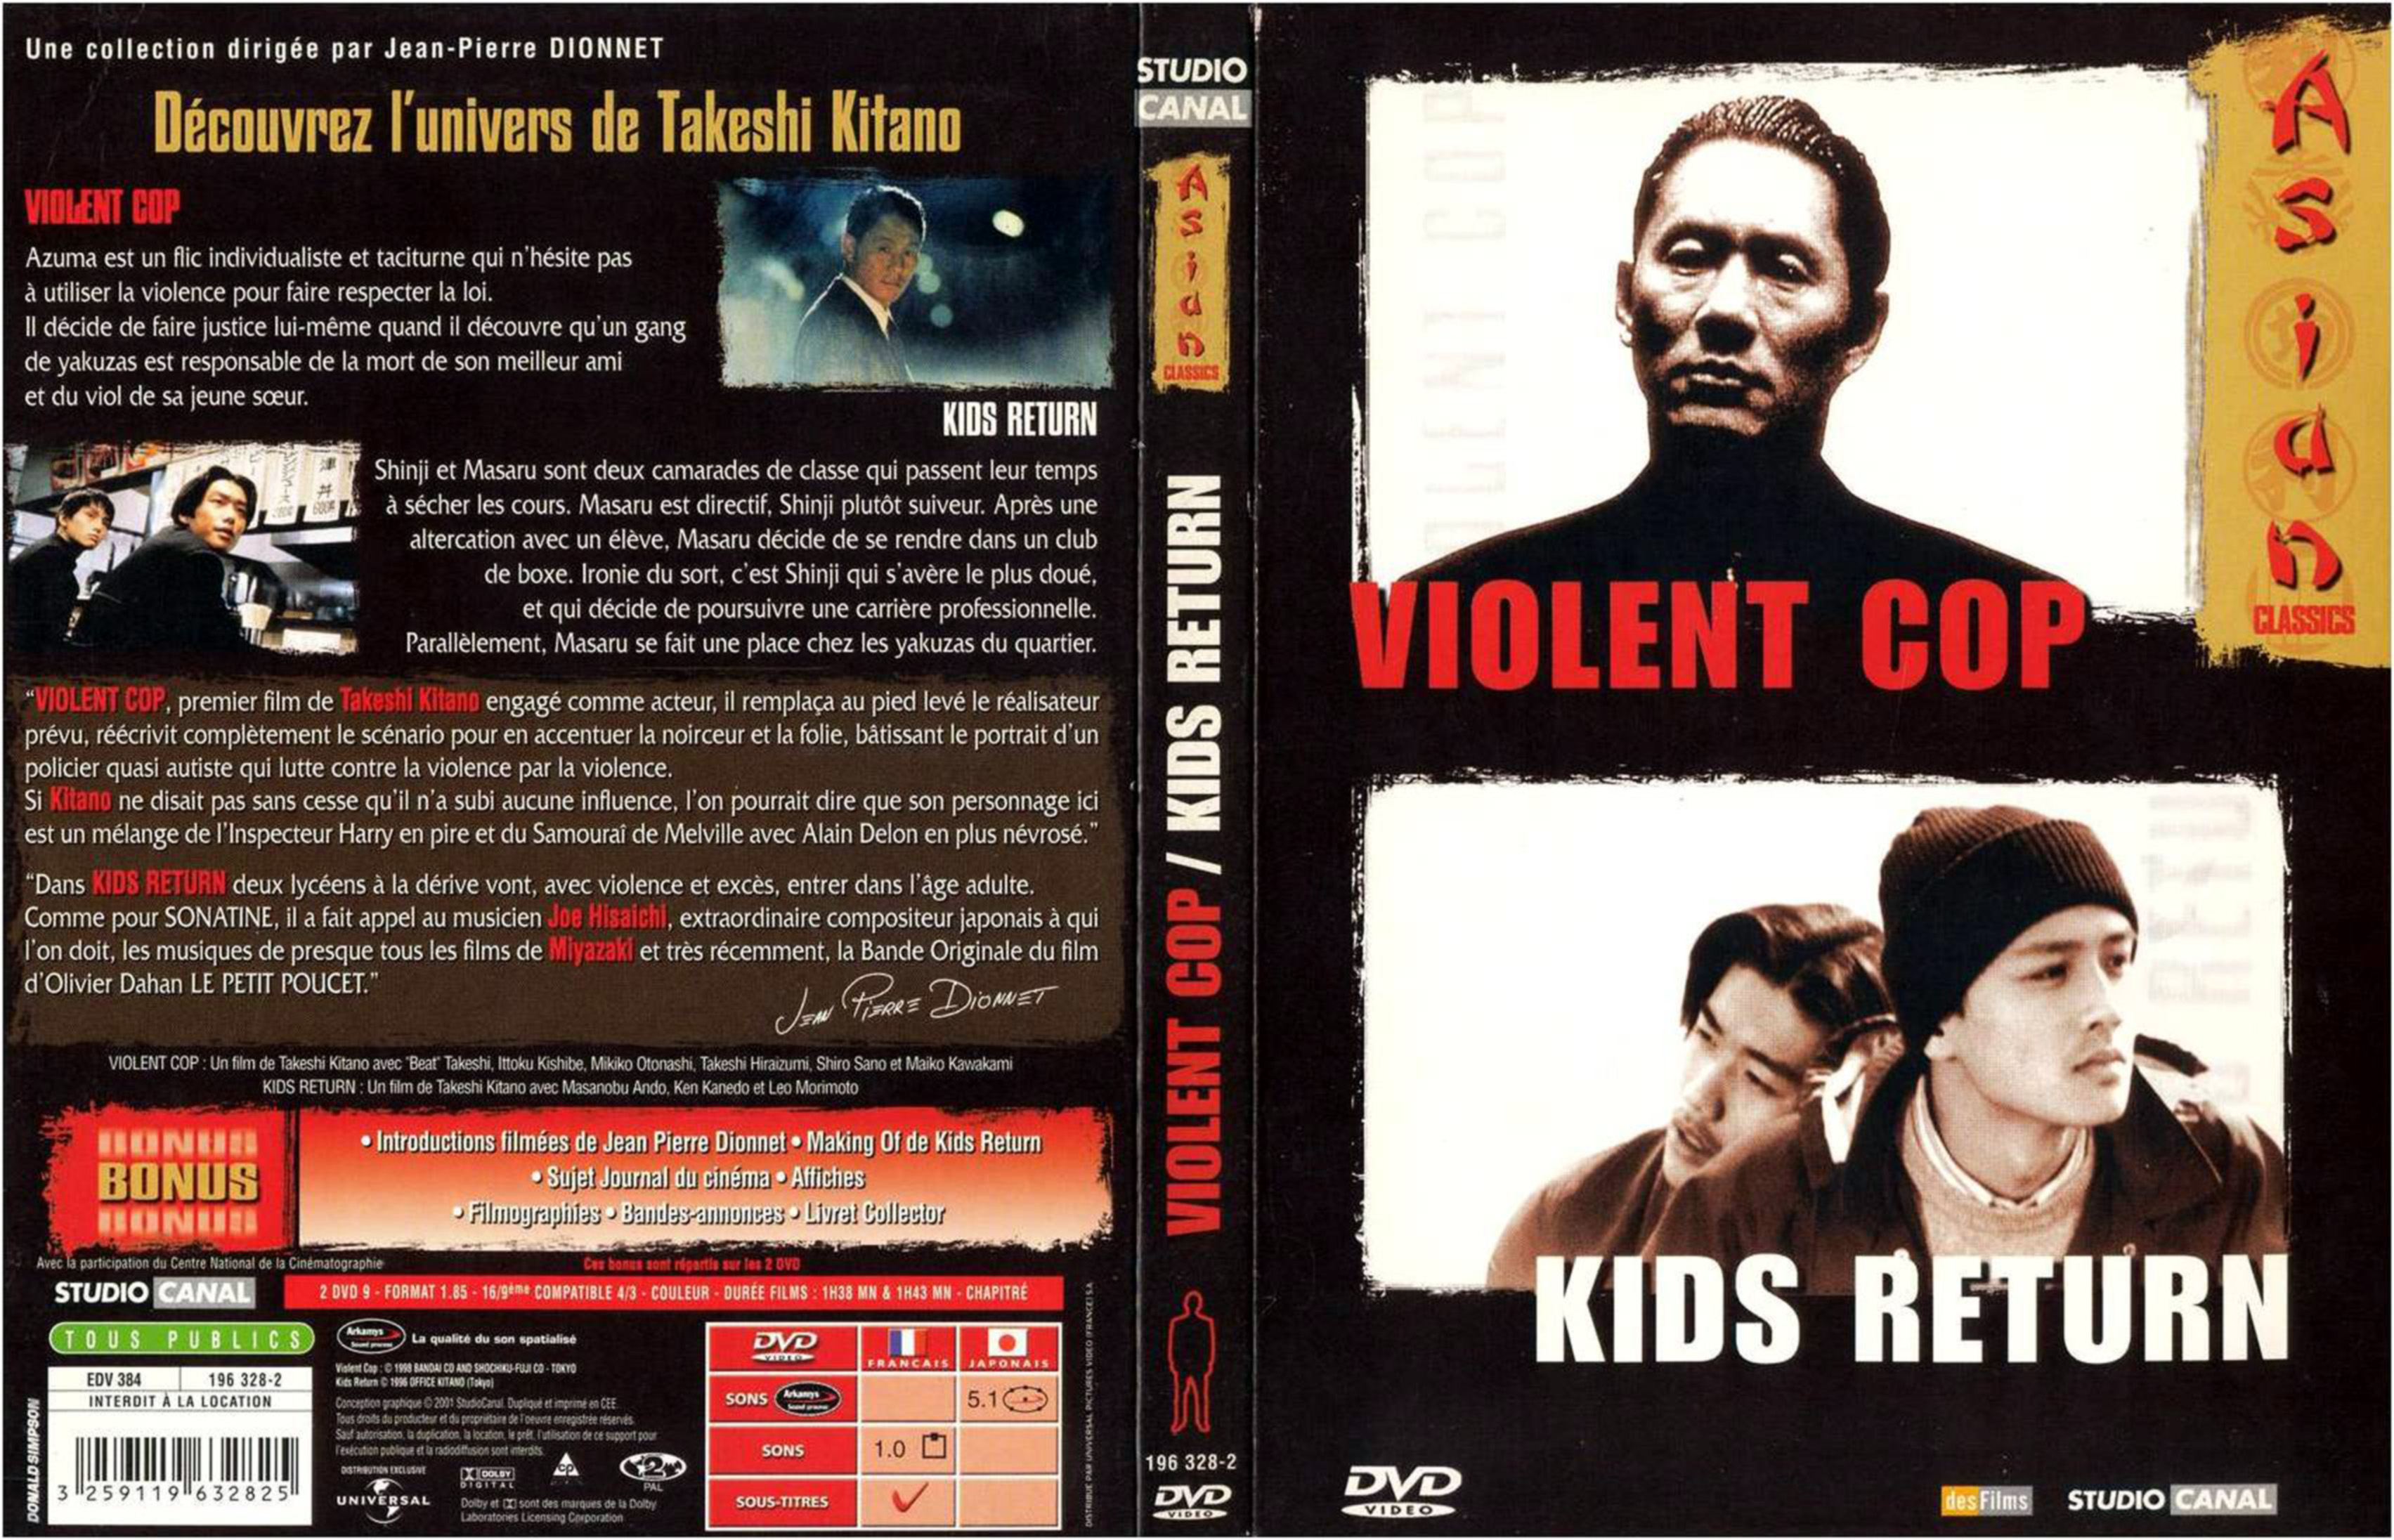 Jaquette DVD Violent cop + Kids return